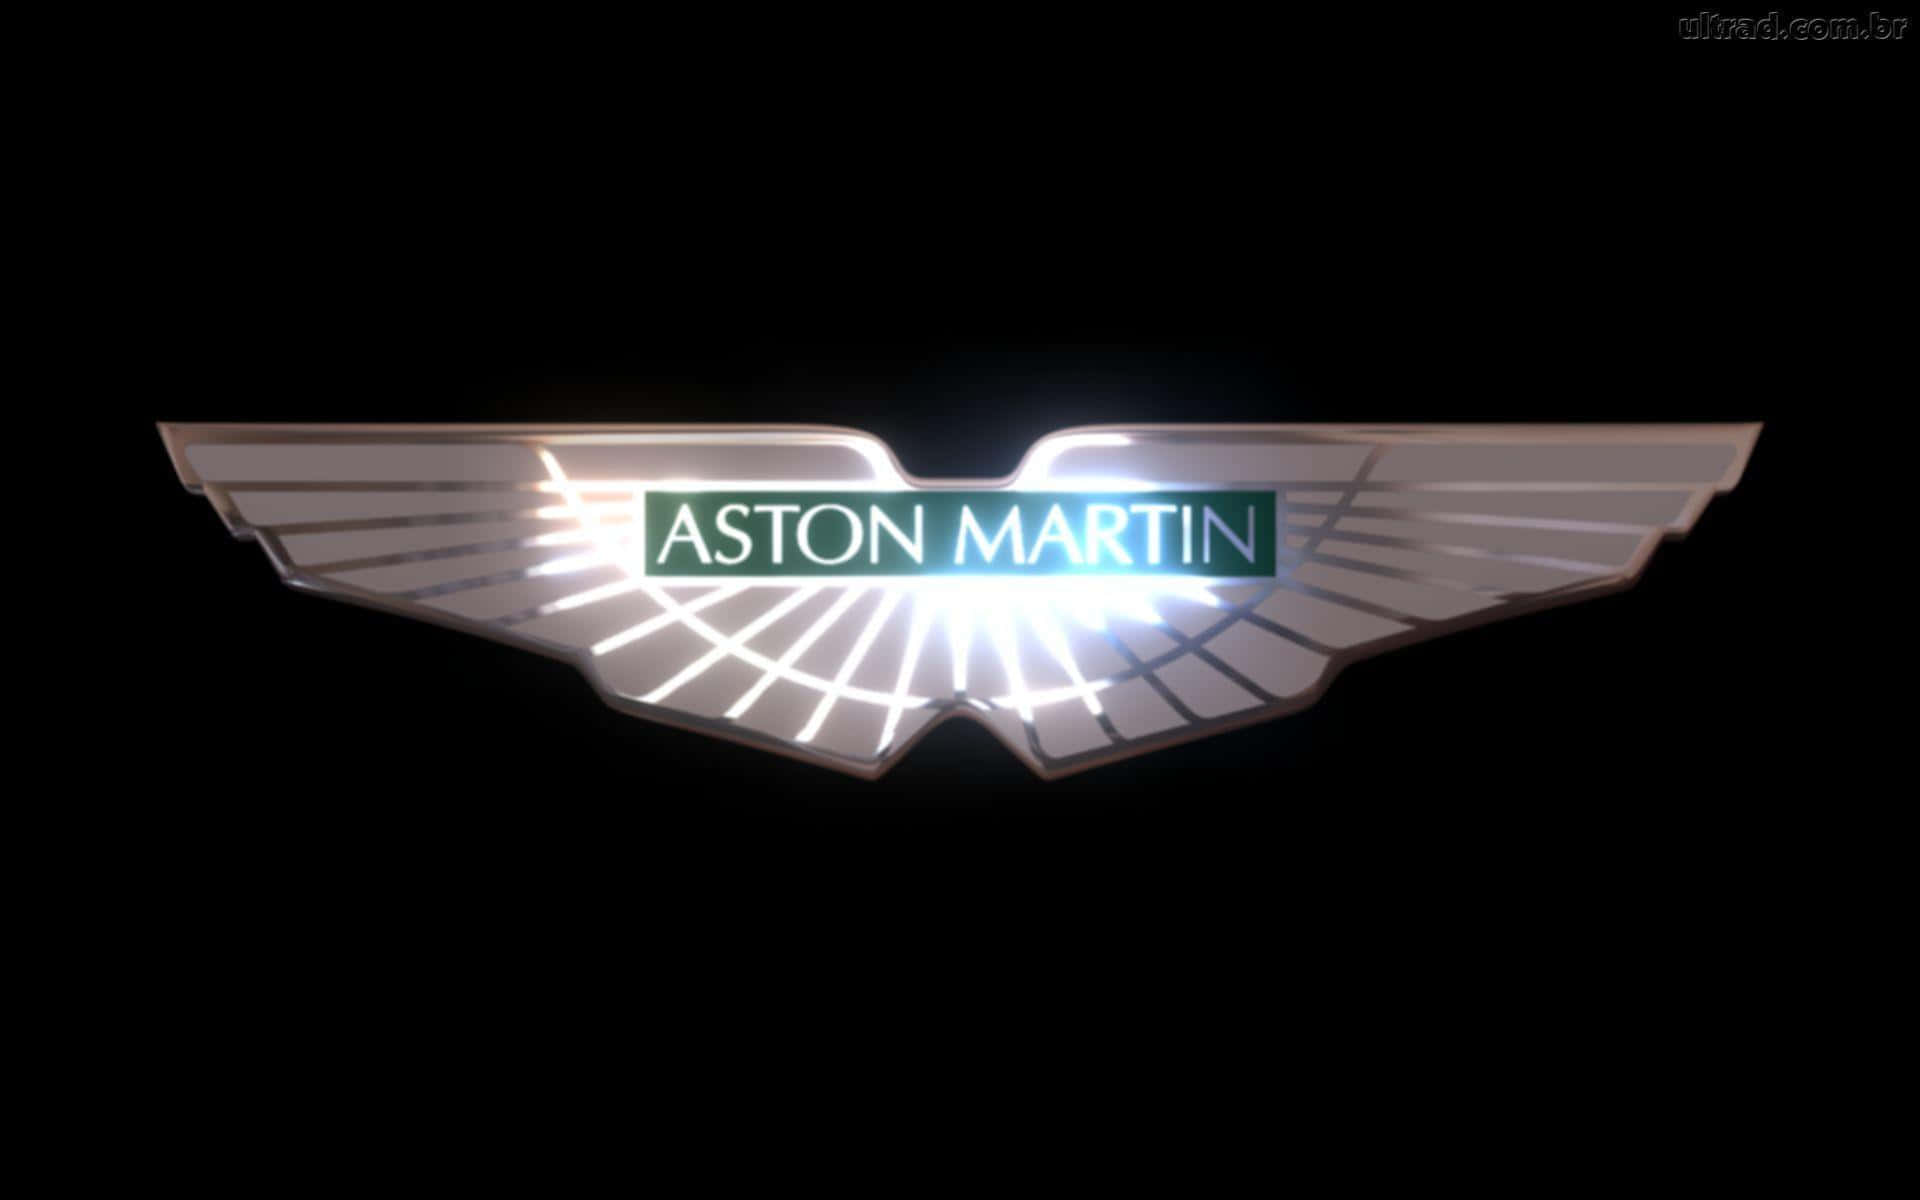 The iconic Aston Martin V8 Vantage